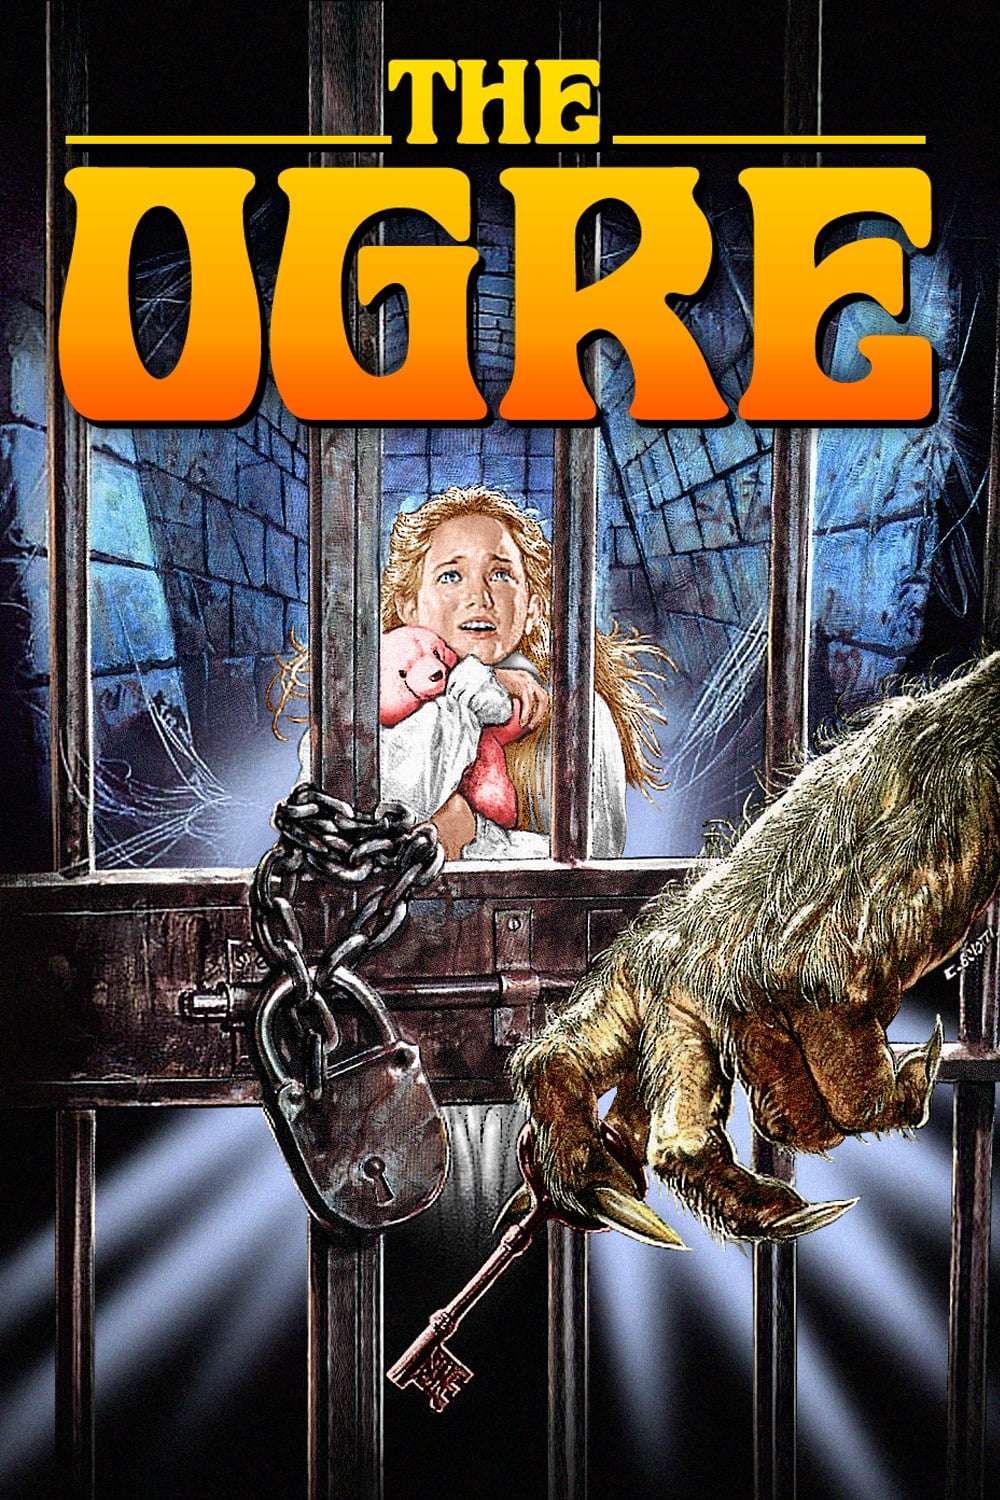 The Ogre (1989) by Lamberto Bava